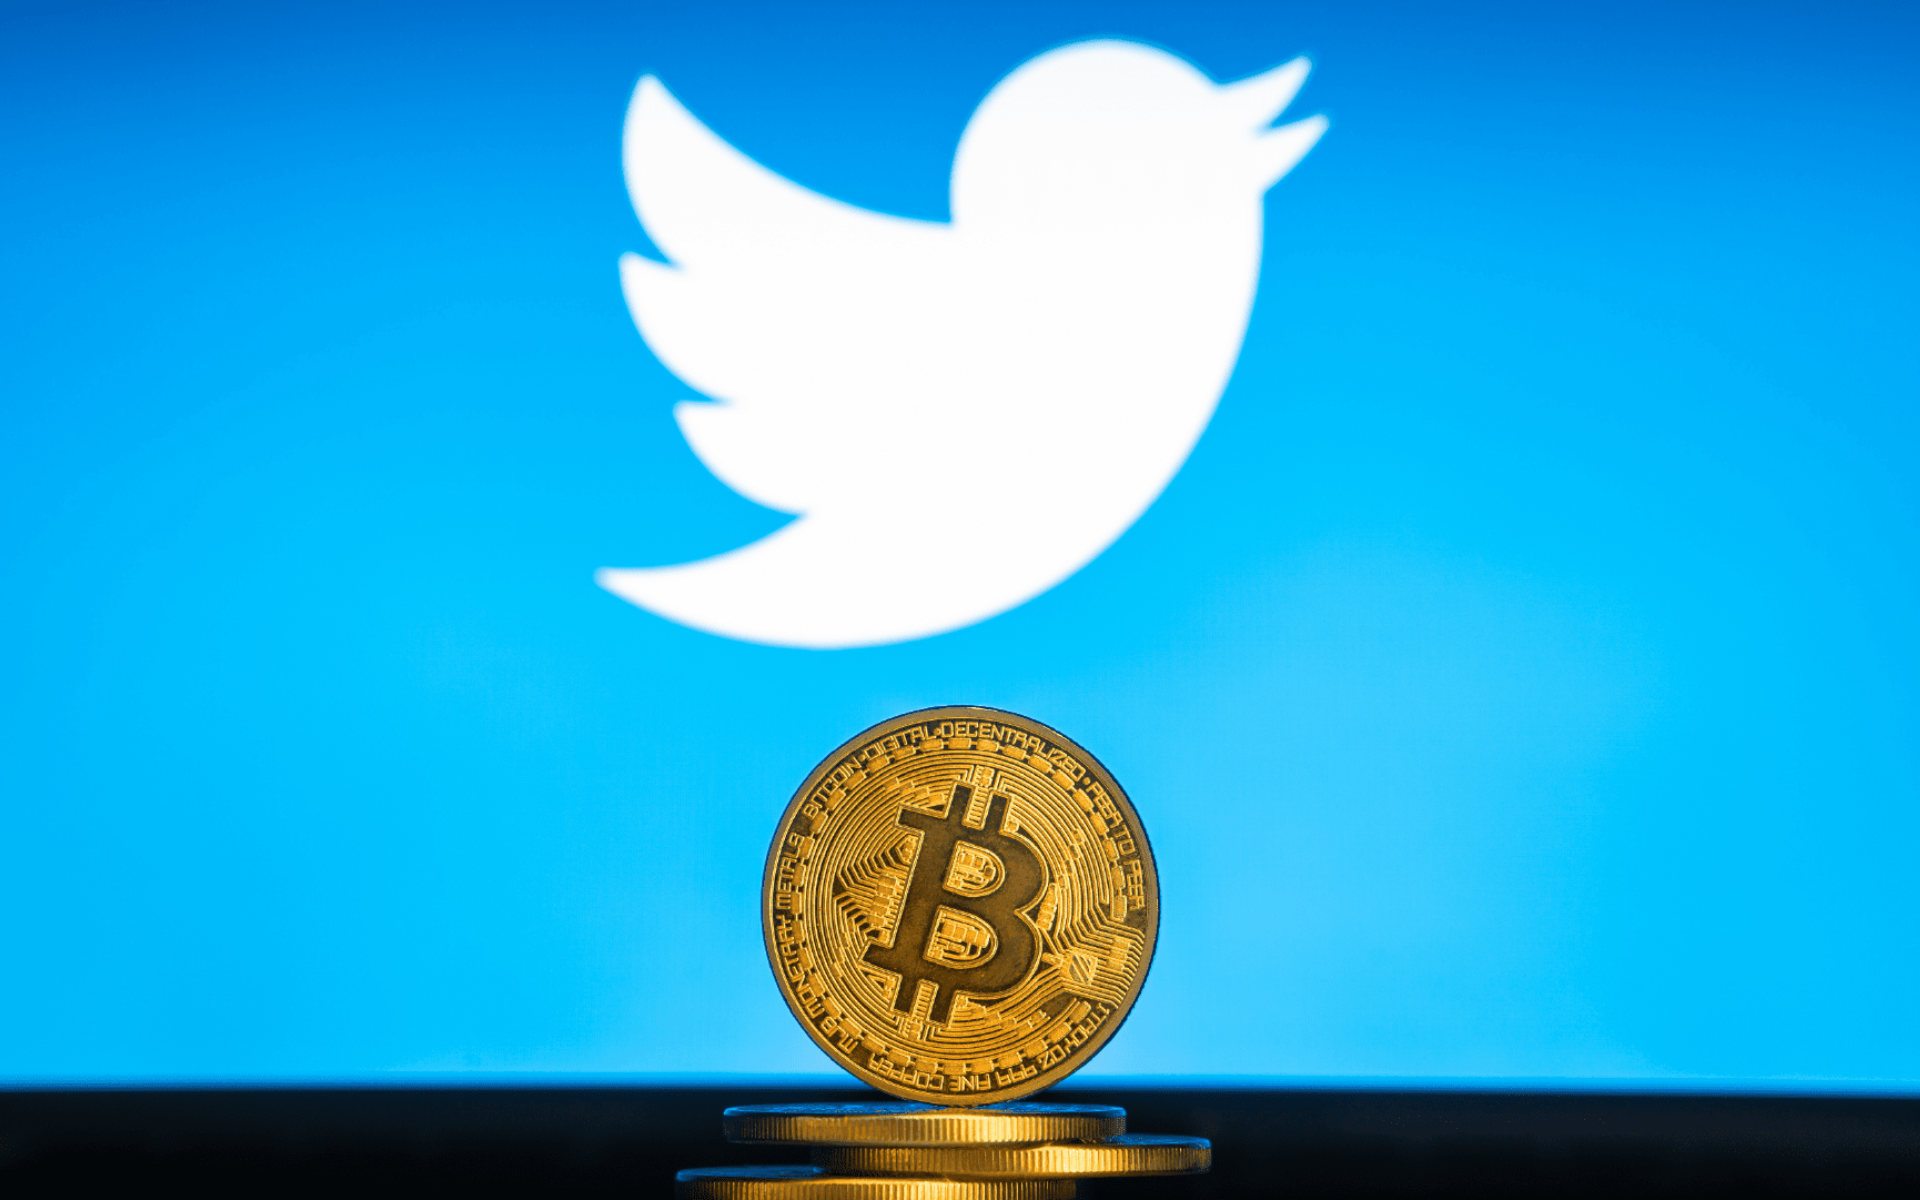 Twitter adds Bitcoin emoji; Dorsey uses it in bio